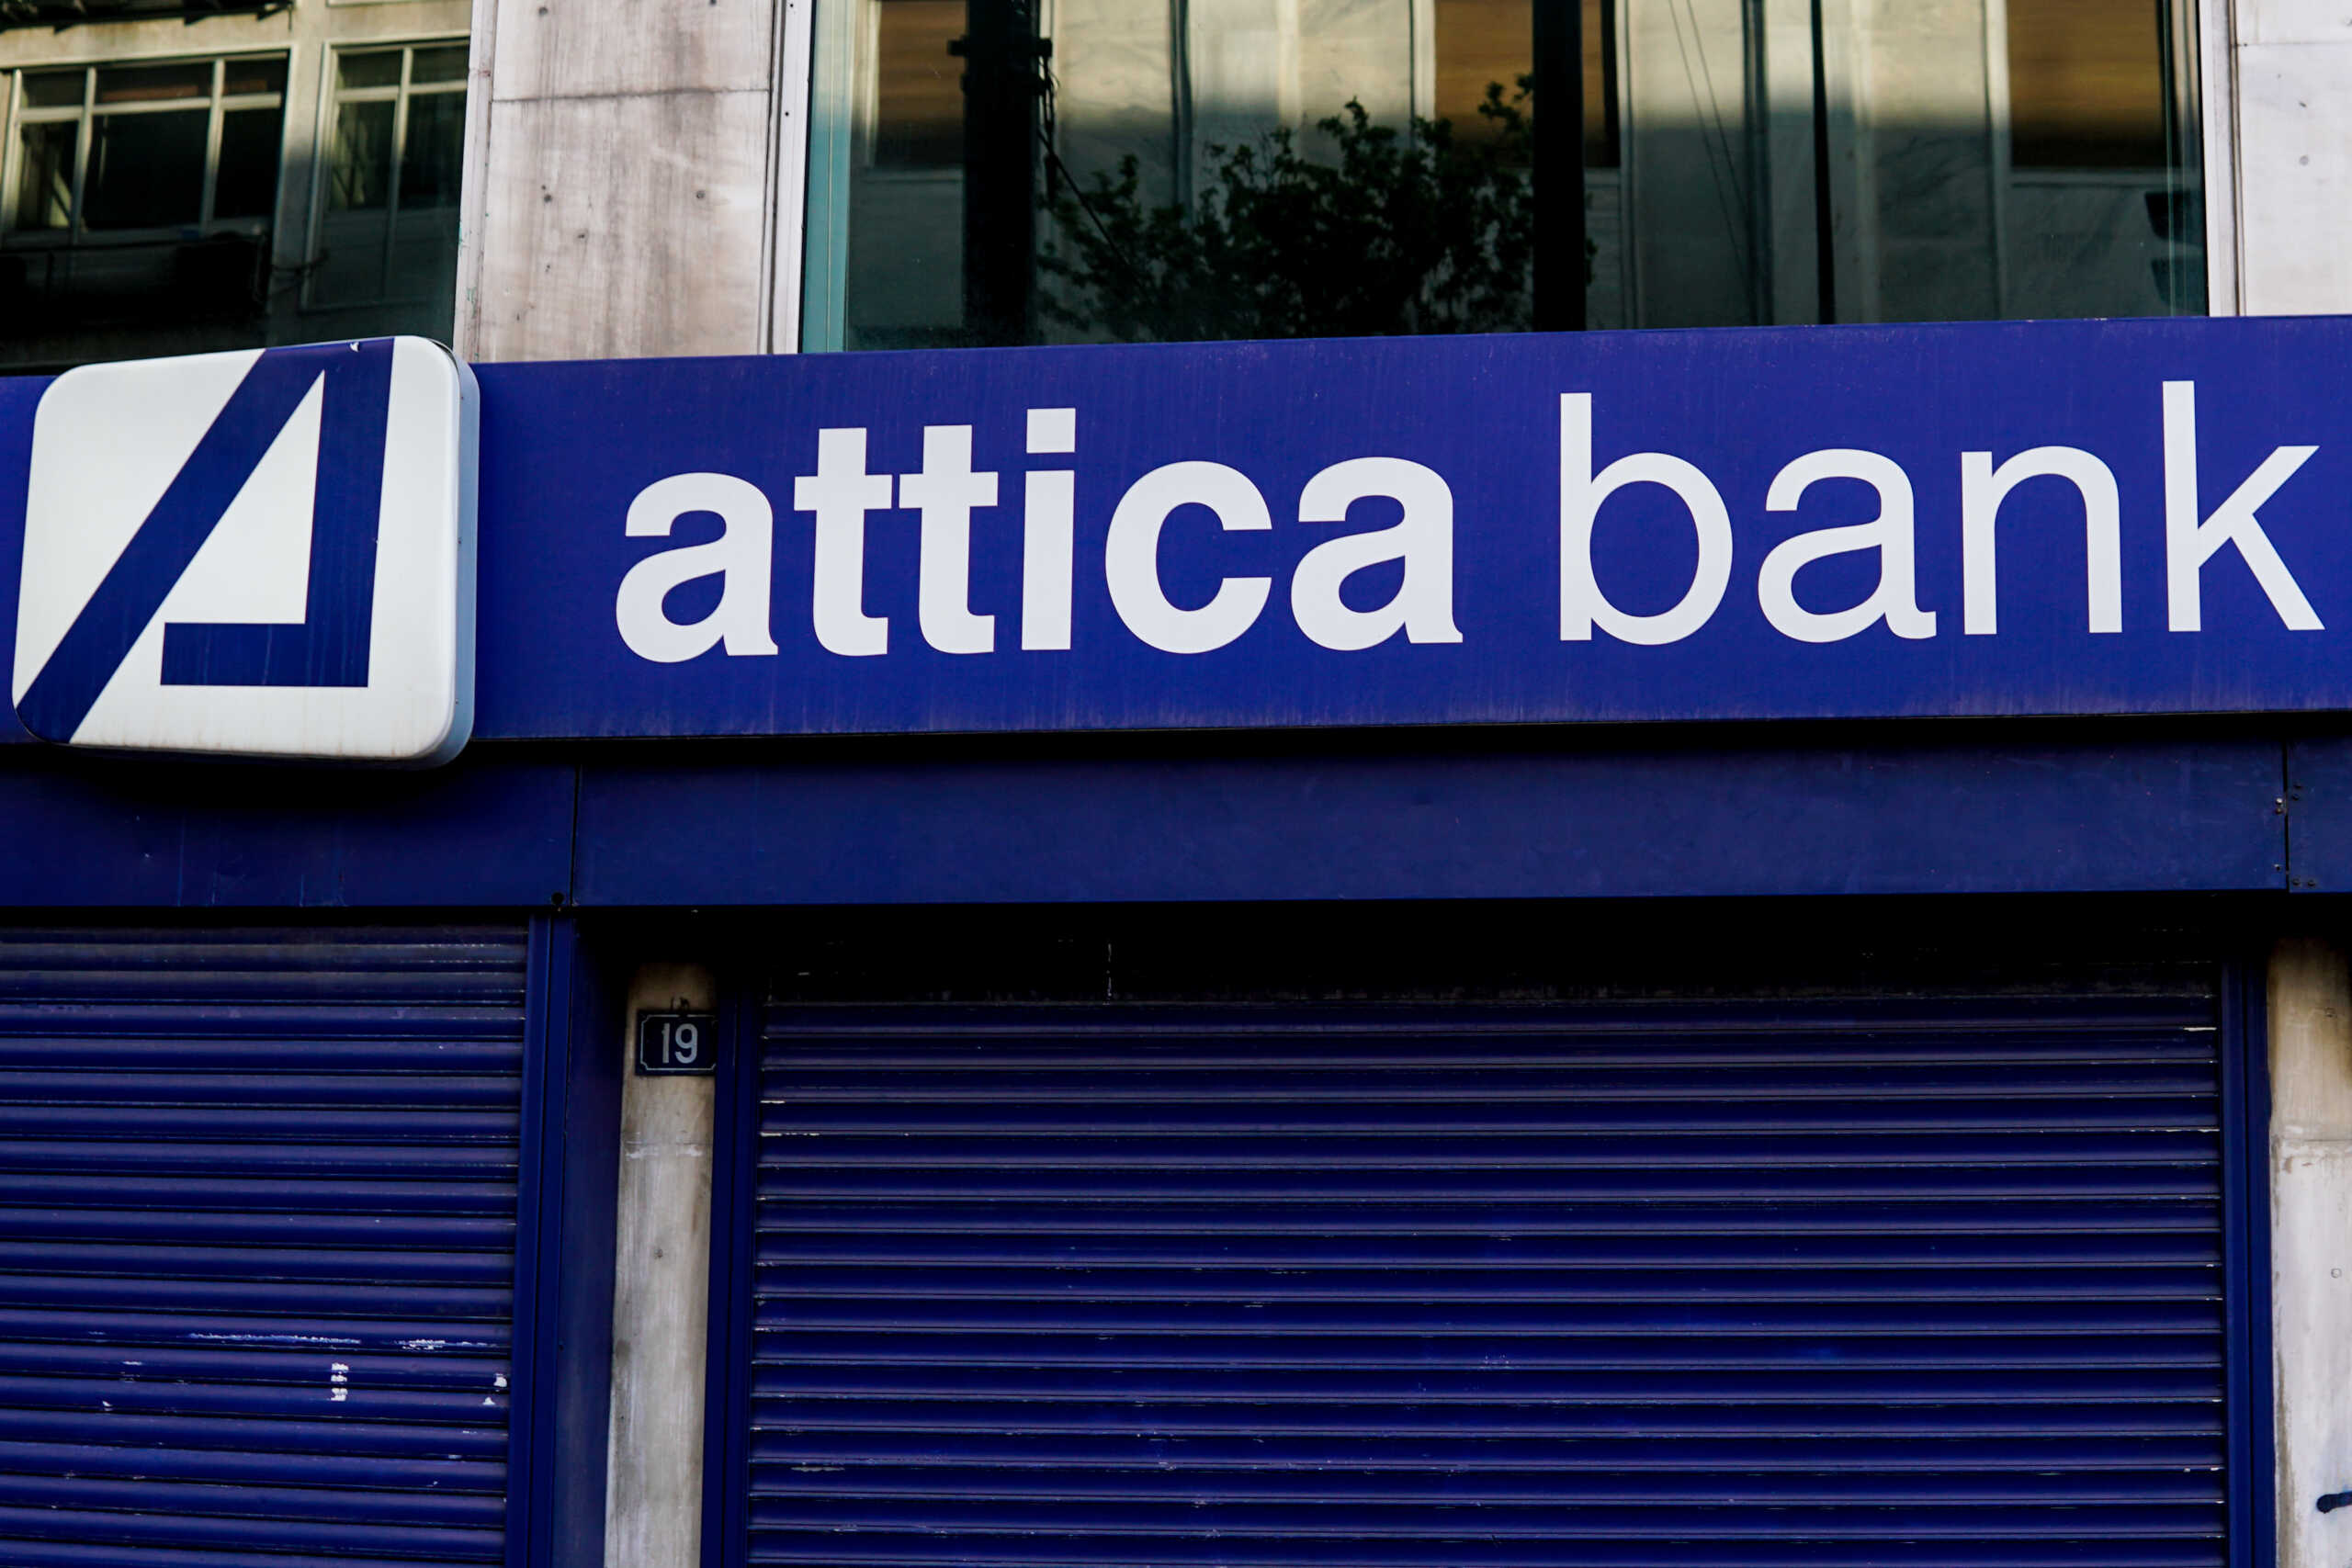 Attica bank: Ο οδικός χάρτης της συγχώνευσης με την Παγκρήτια Τράπεζα